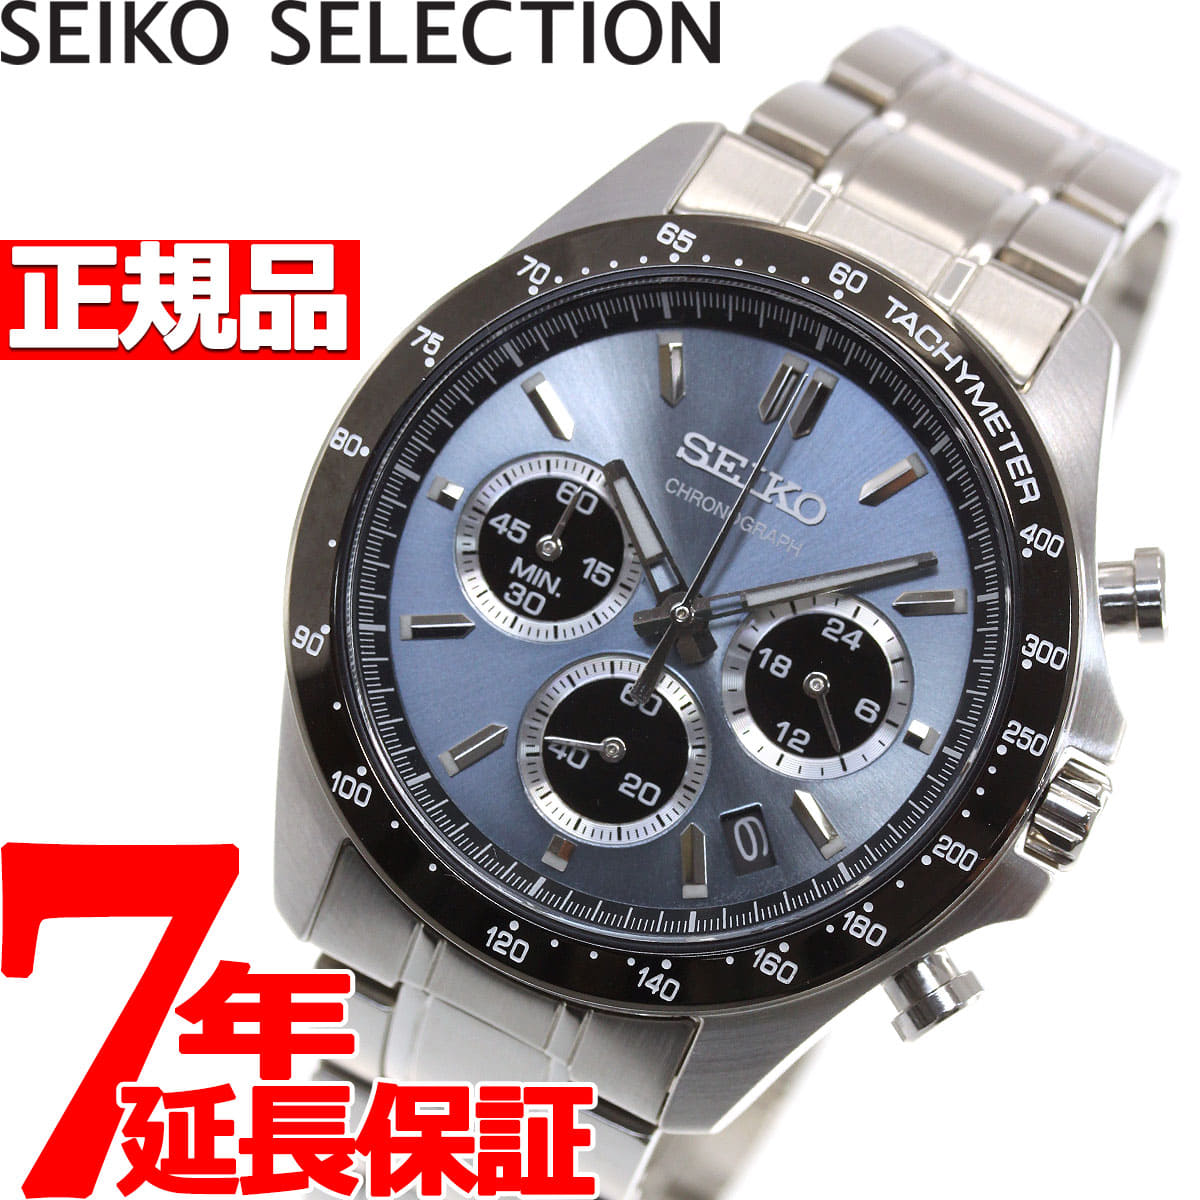 New]SEIKO selection SEIKO SELECTION watch men chronograph SBTR027 [2018 new  works] - BE FORWARD Store